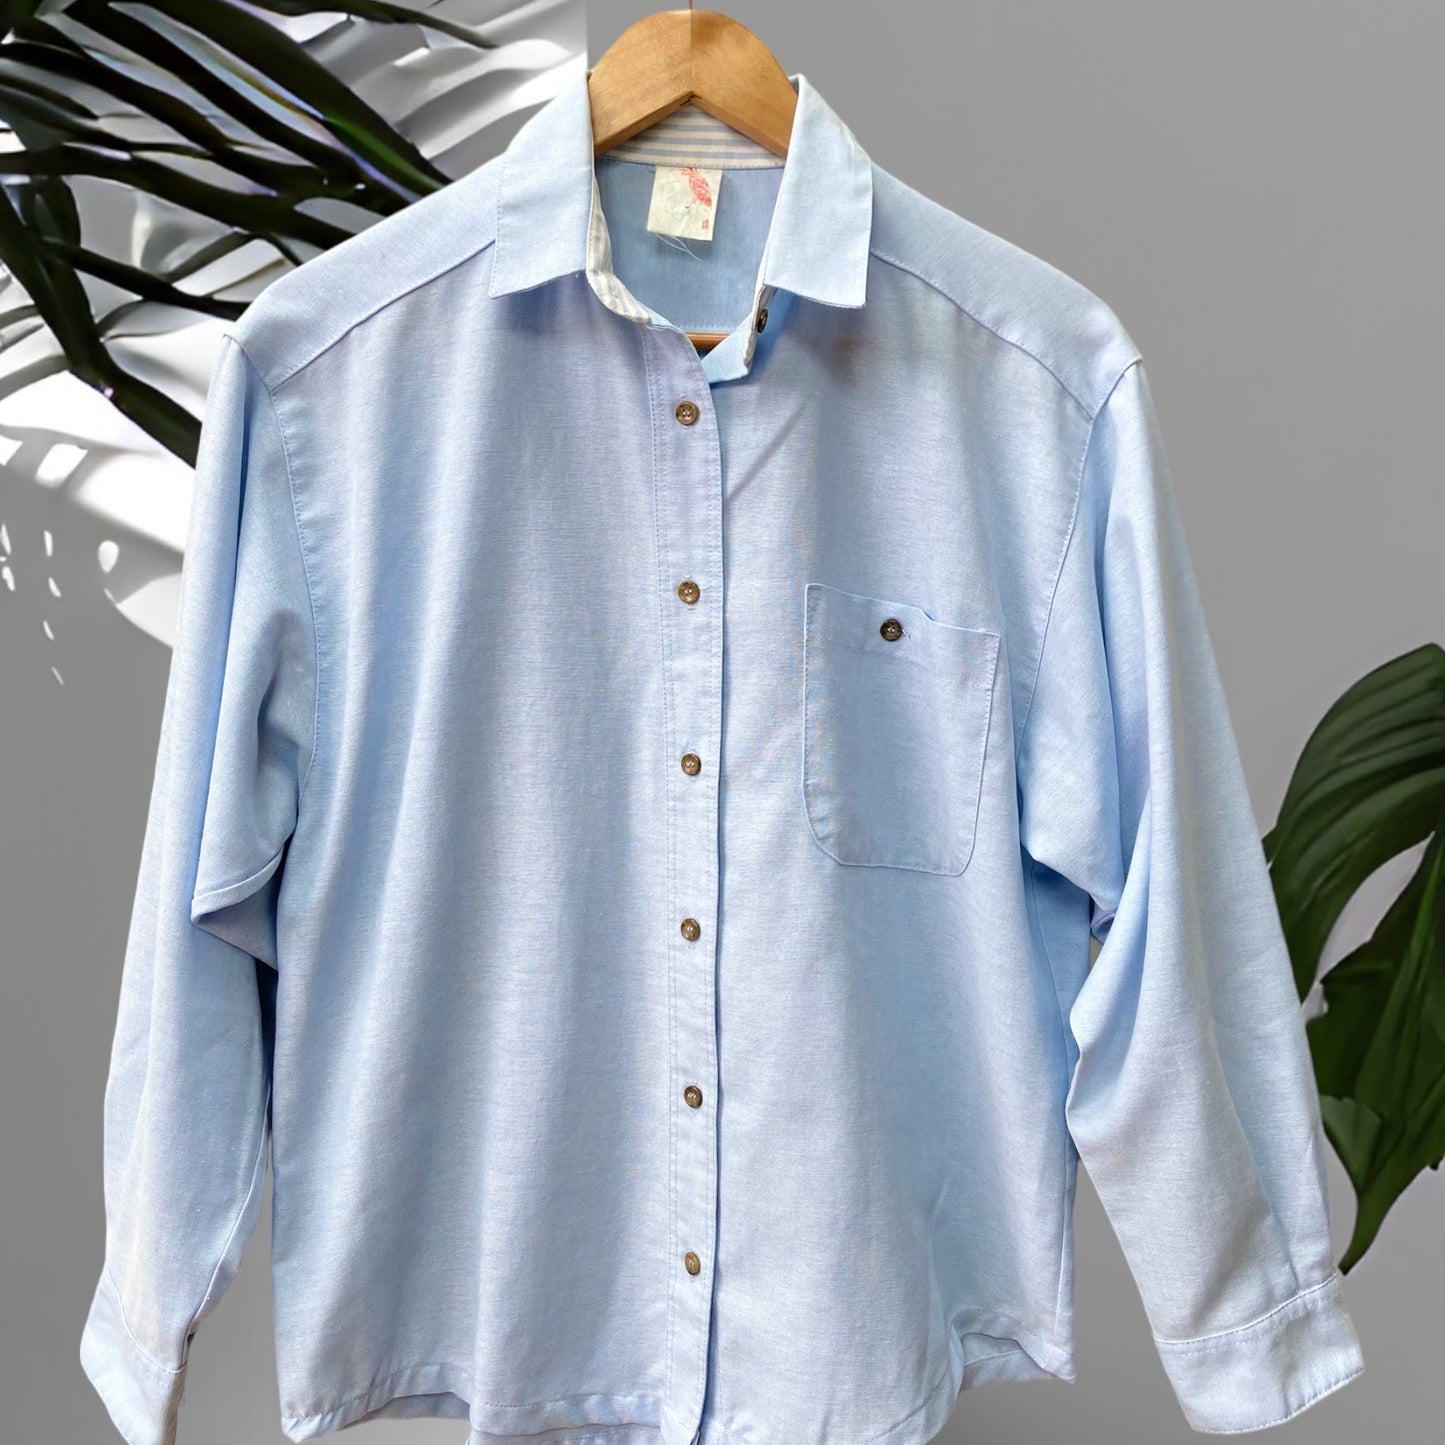 Pollys Button Up Shirt Size 10 -12